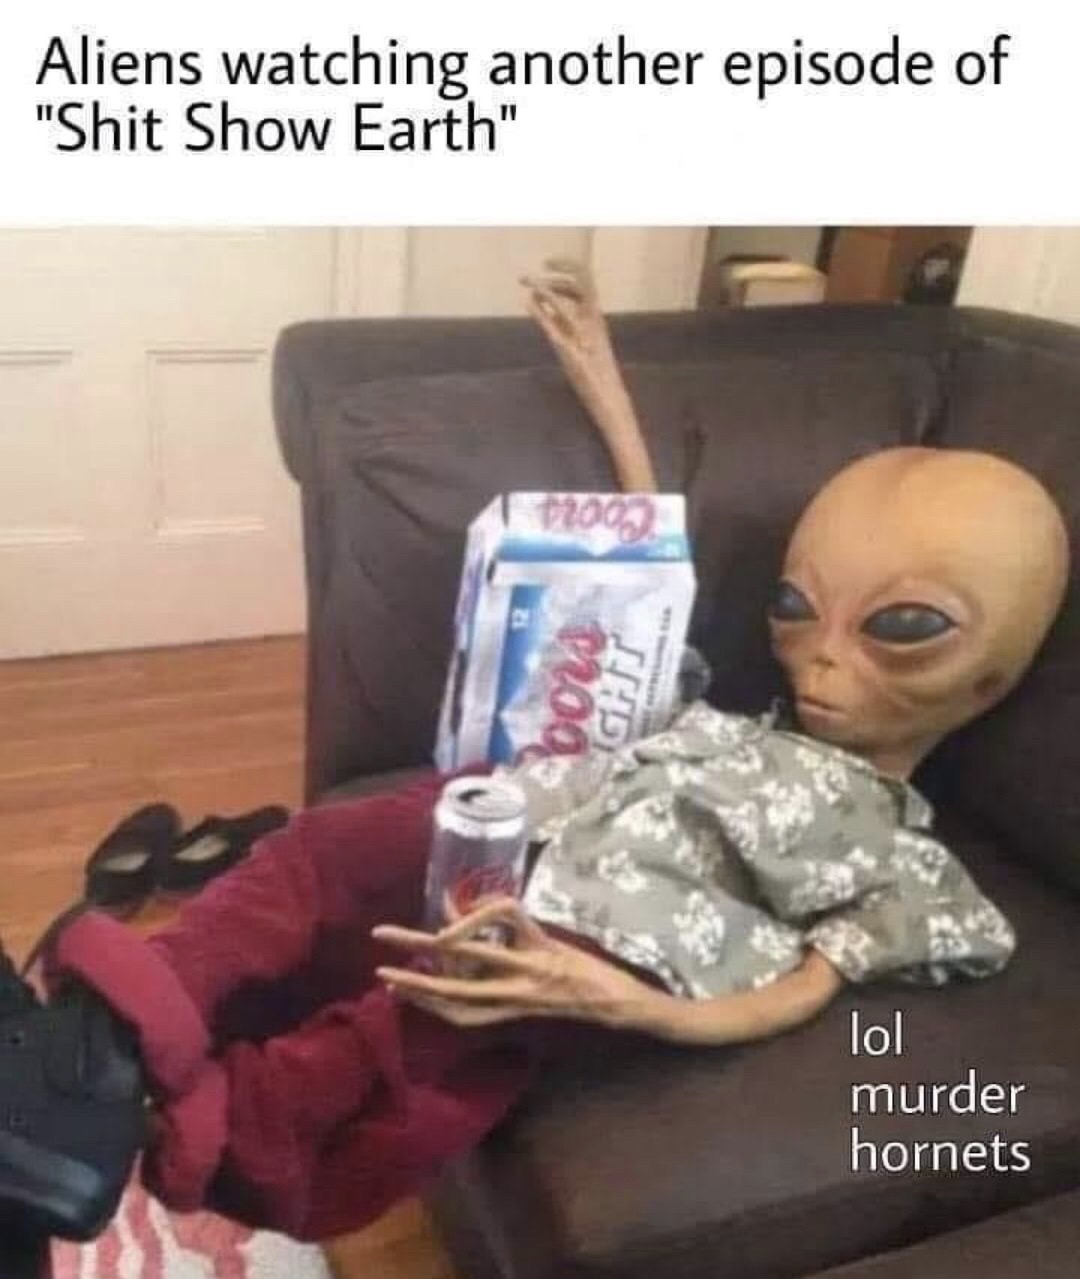 suicidal millennials meme - Aliens watching another episode of "Shit Show Earth" 2002 mog lol murder hornets